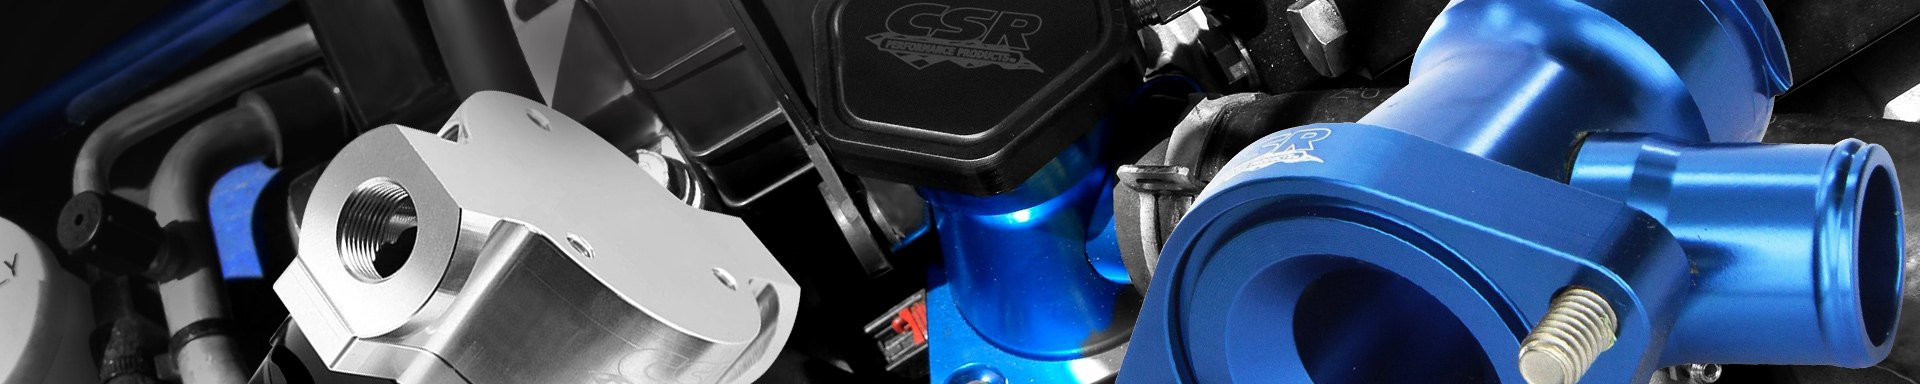 CSR Performance Racing Radiators & Cooling Parts